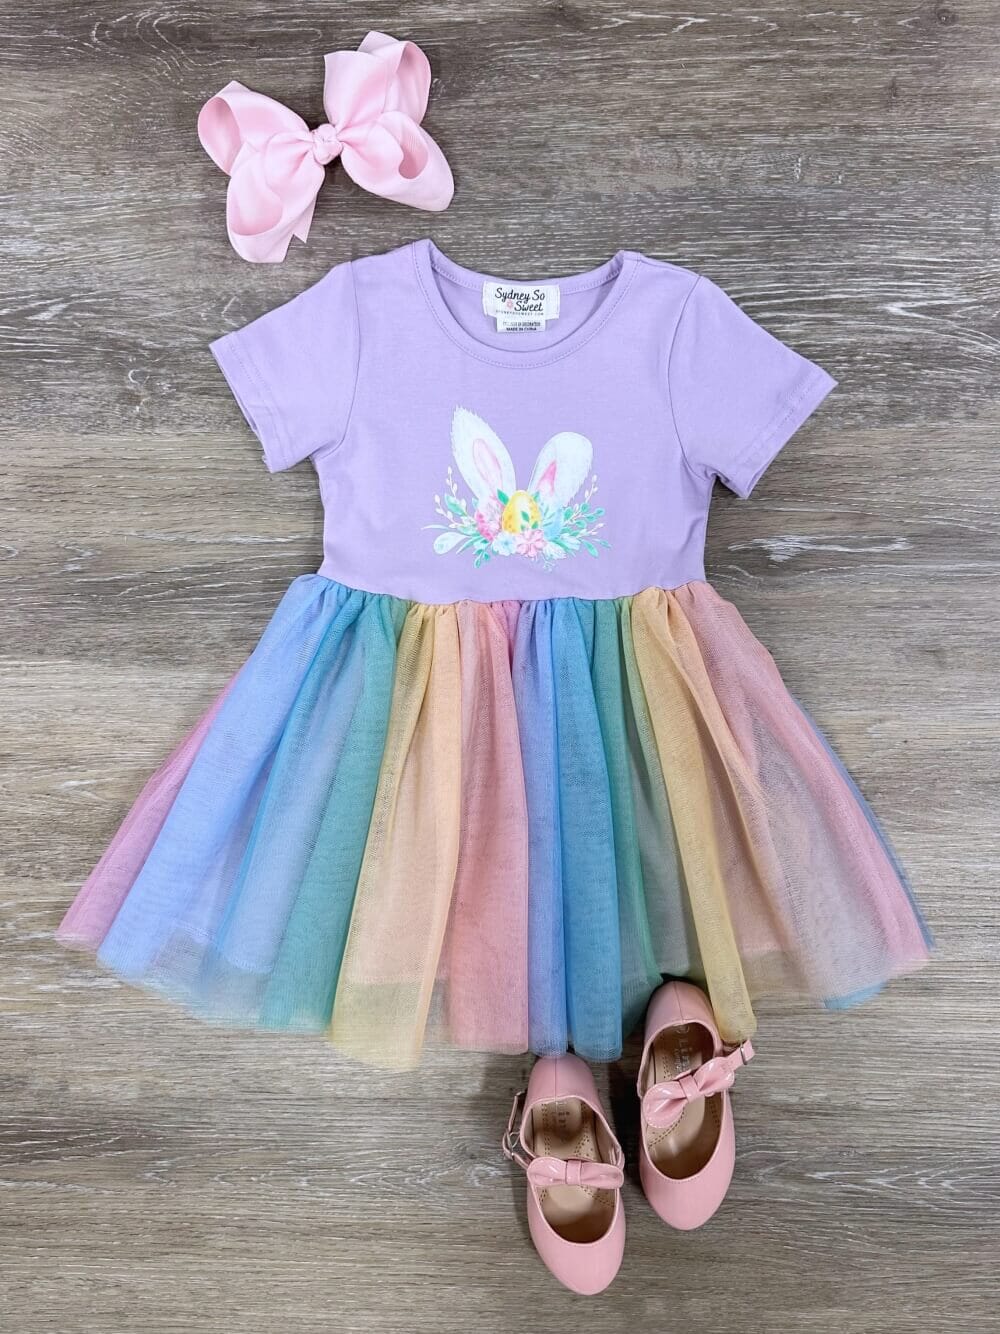 Little Honey Bunny Blue & Pink Polka Dots Girls Capri Outfit